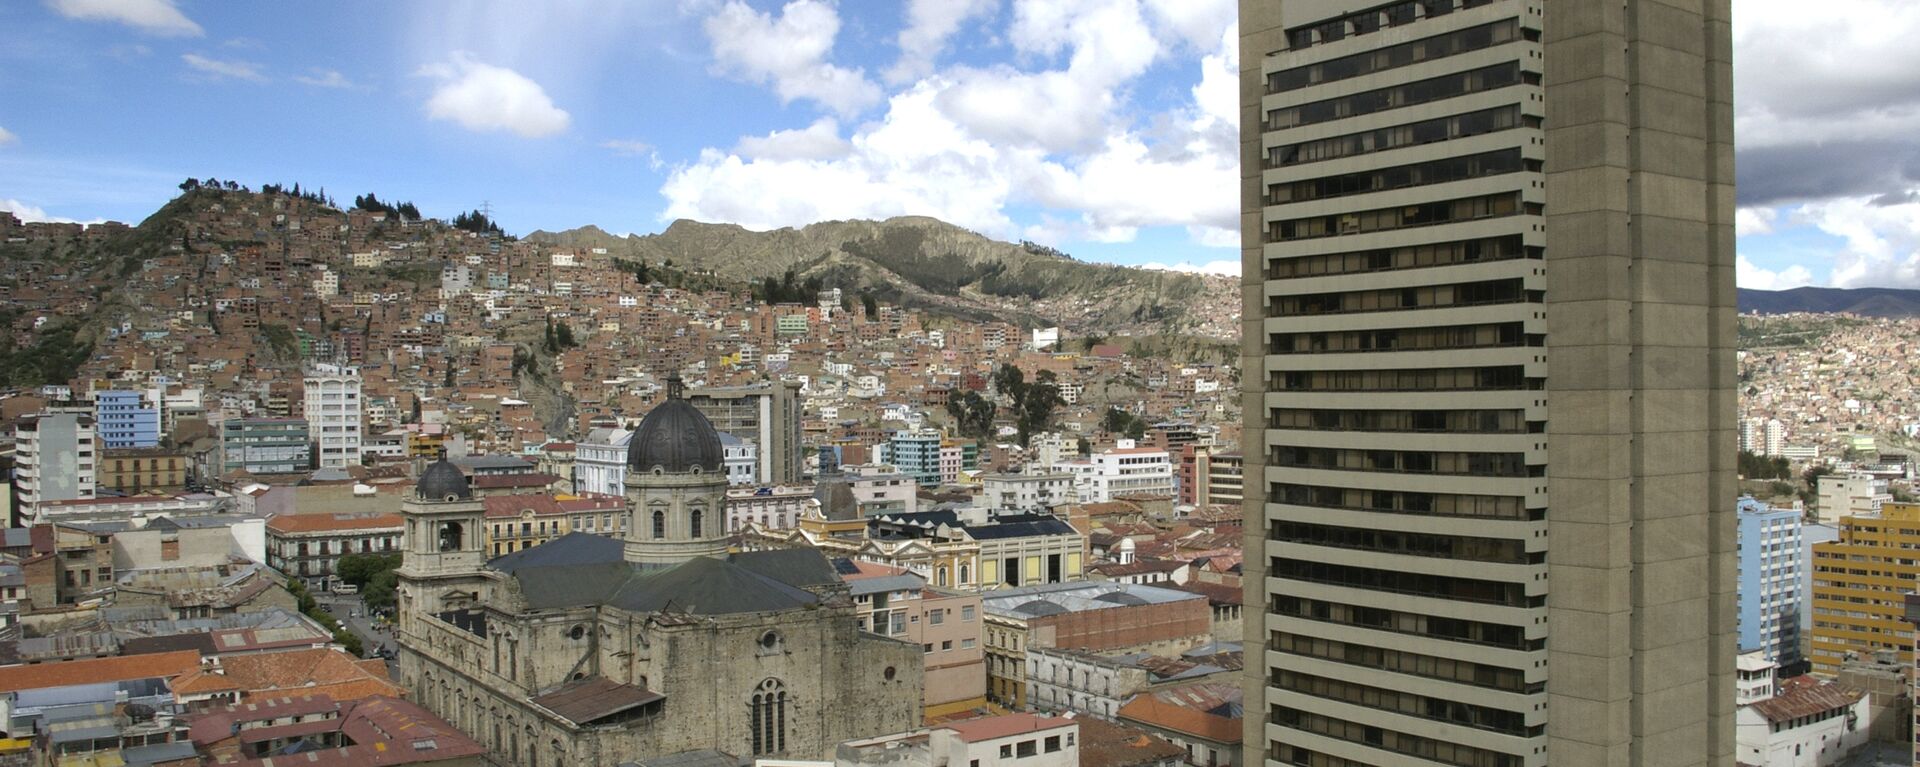 La Paz, la capital de Bolivia - Sputnik Mundo, 1920, 27.10.2021